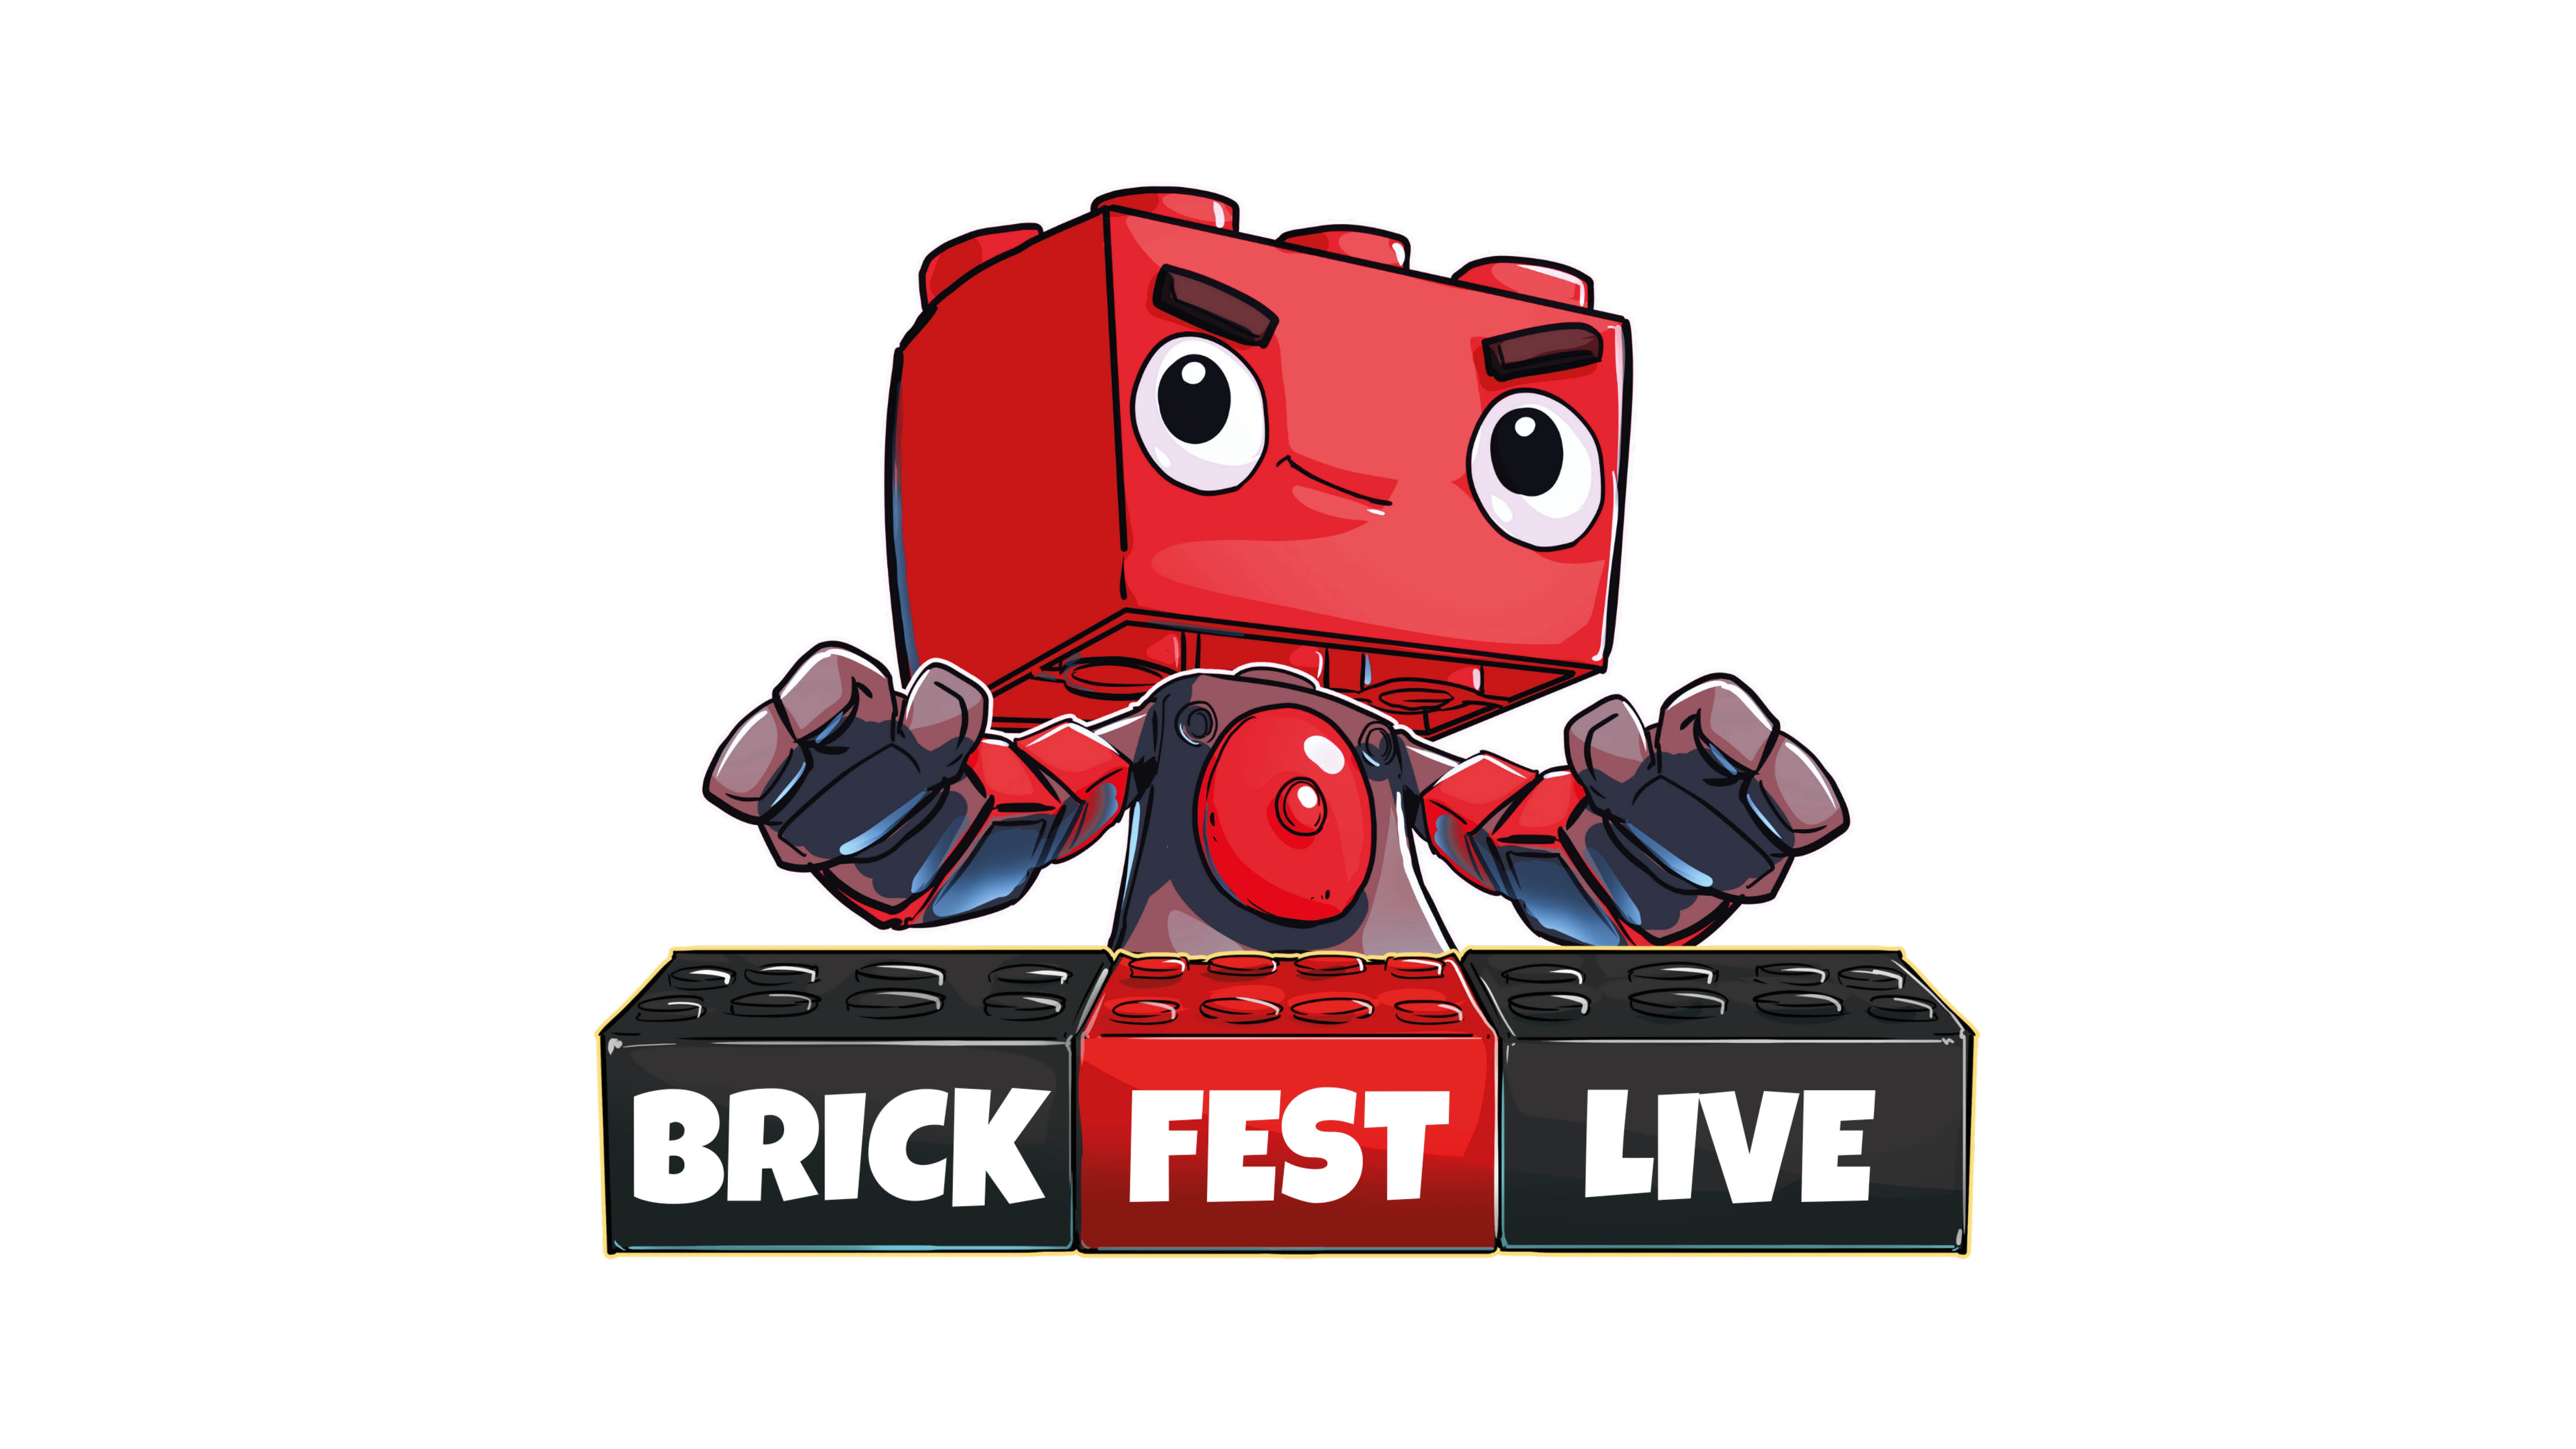 BRICK FEST LIVE!